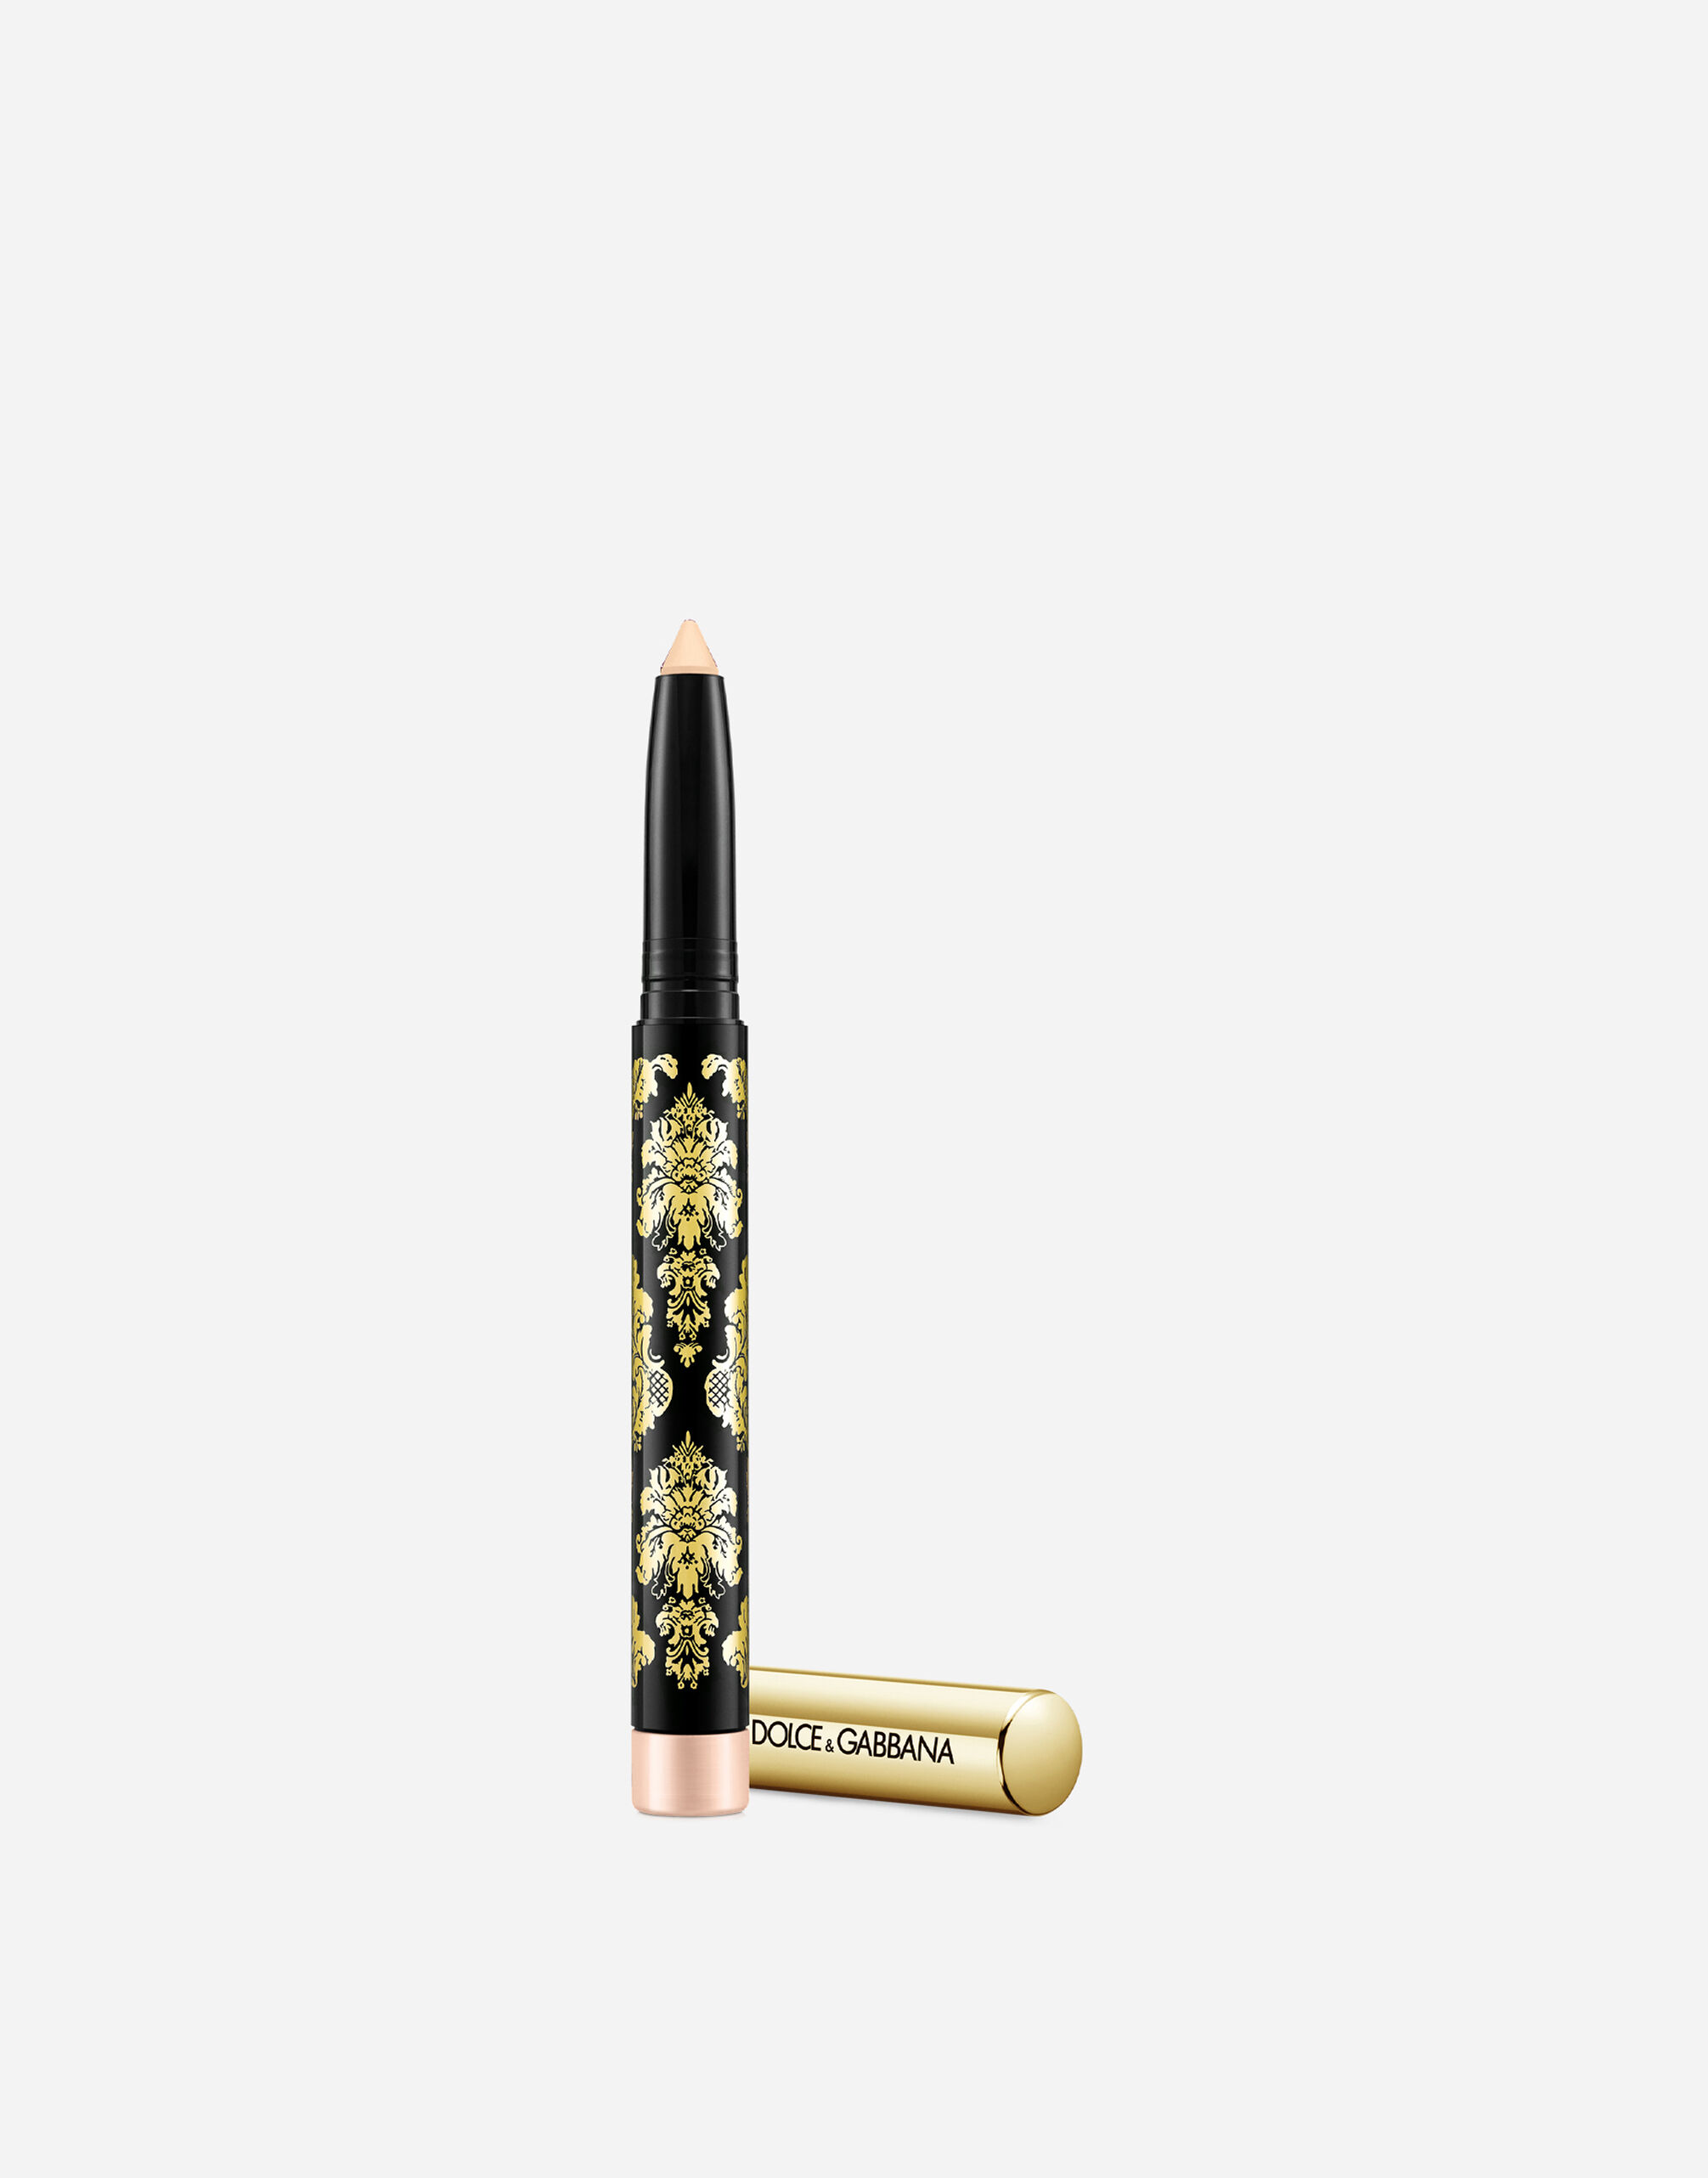 Тени-карандаш для глаз Dolce & Gabbana Intenseyes кремовые, №2 Nude, 1,4 г карандаш кайал для глаз dolce